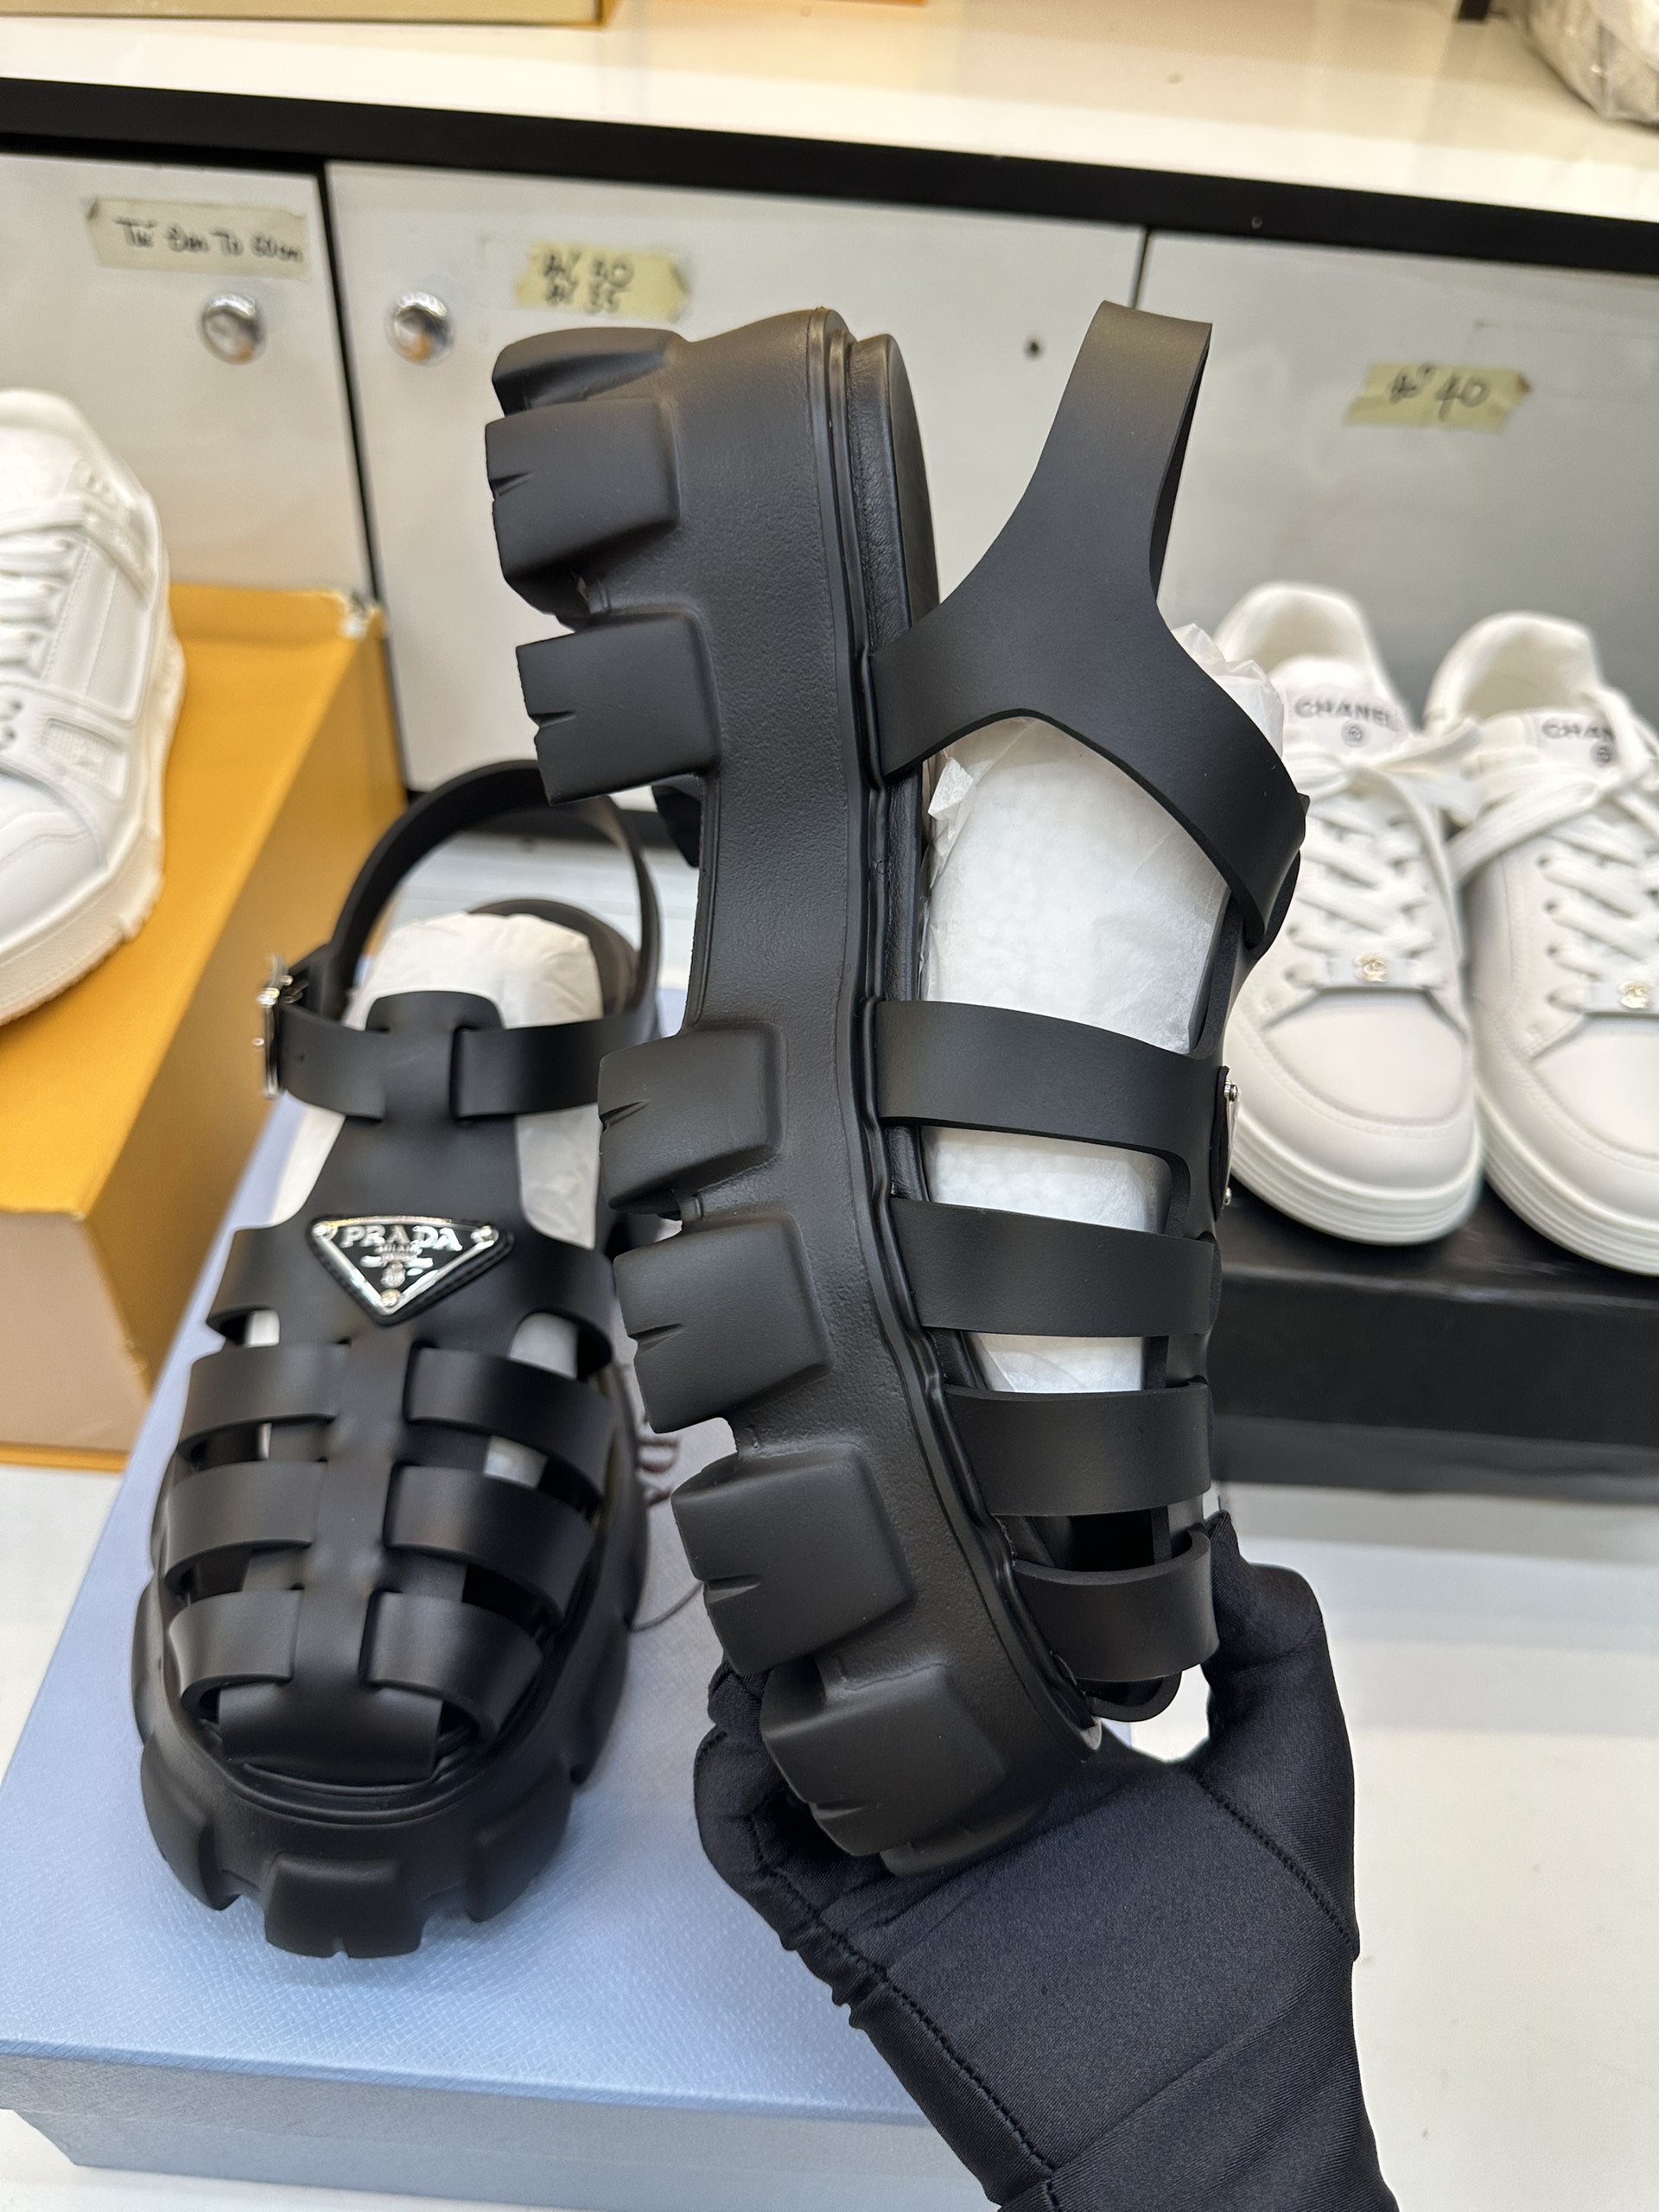 Giày Prada Monolith Foam Rubber Sandals Siêu Cấp Màu Đen Heel 5,5 Size 38